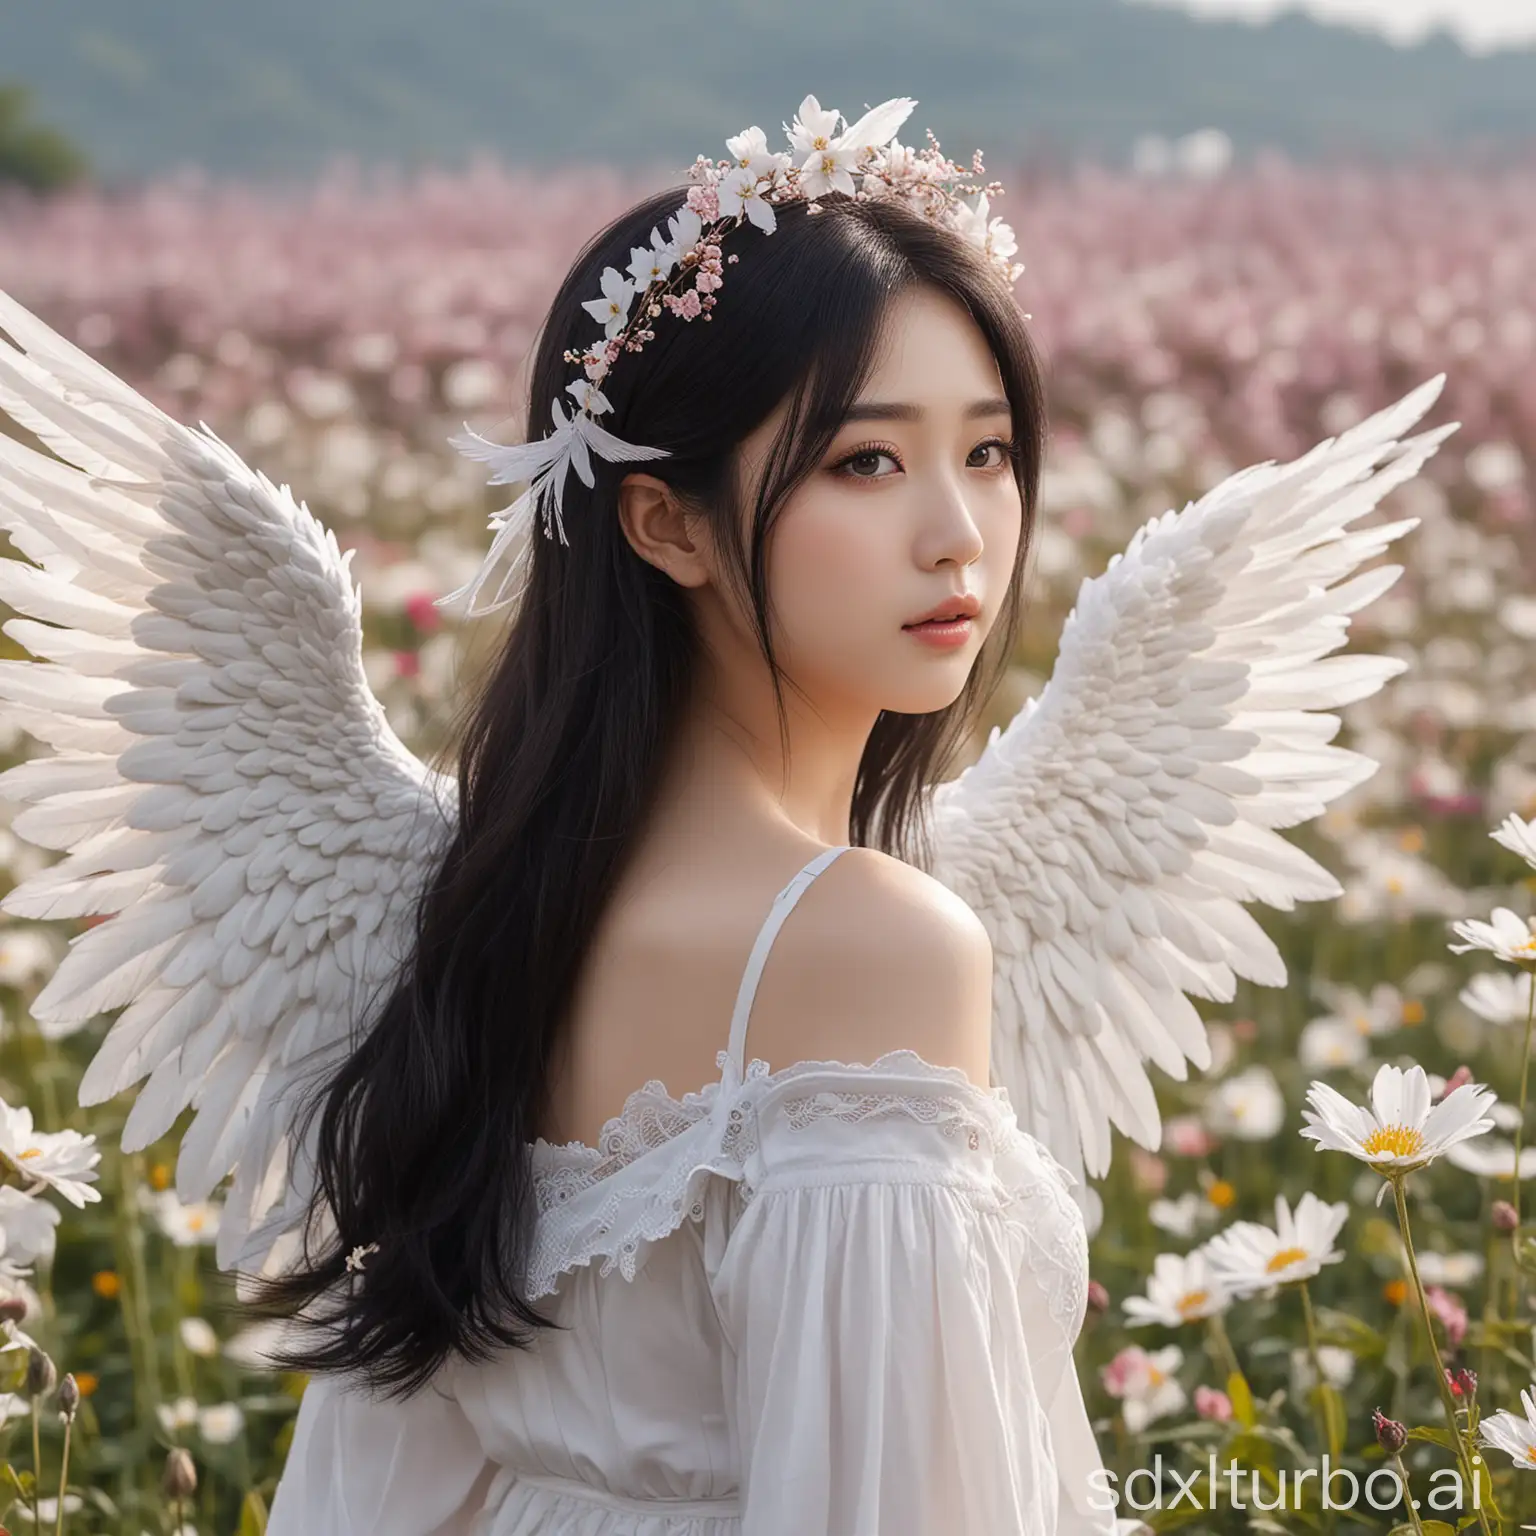 Beautiful-Angel-with-Long-Black-Hair-in-a-Flower-Field